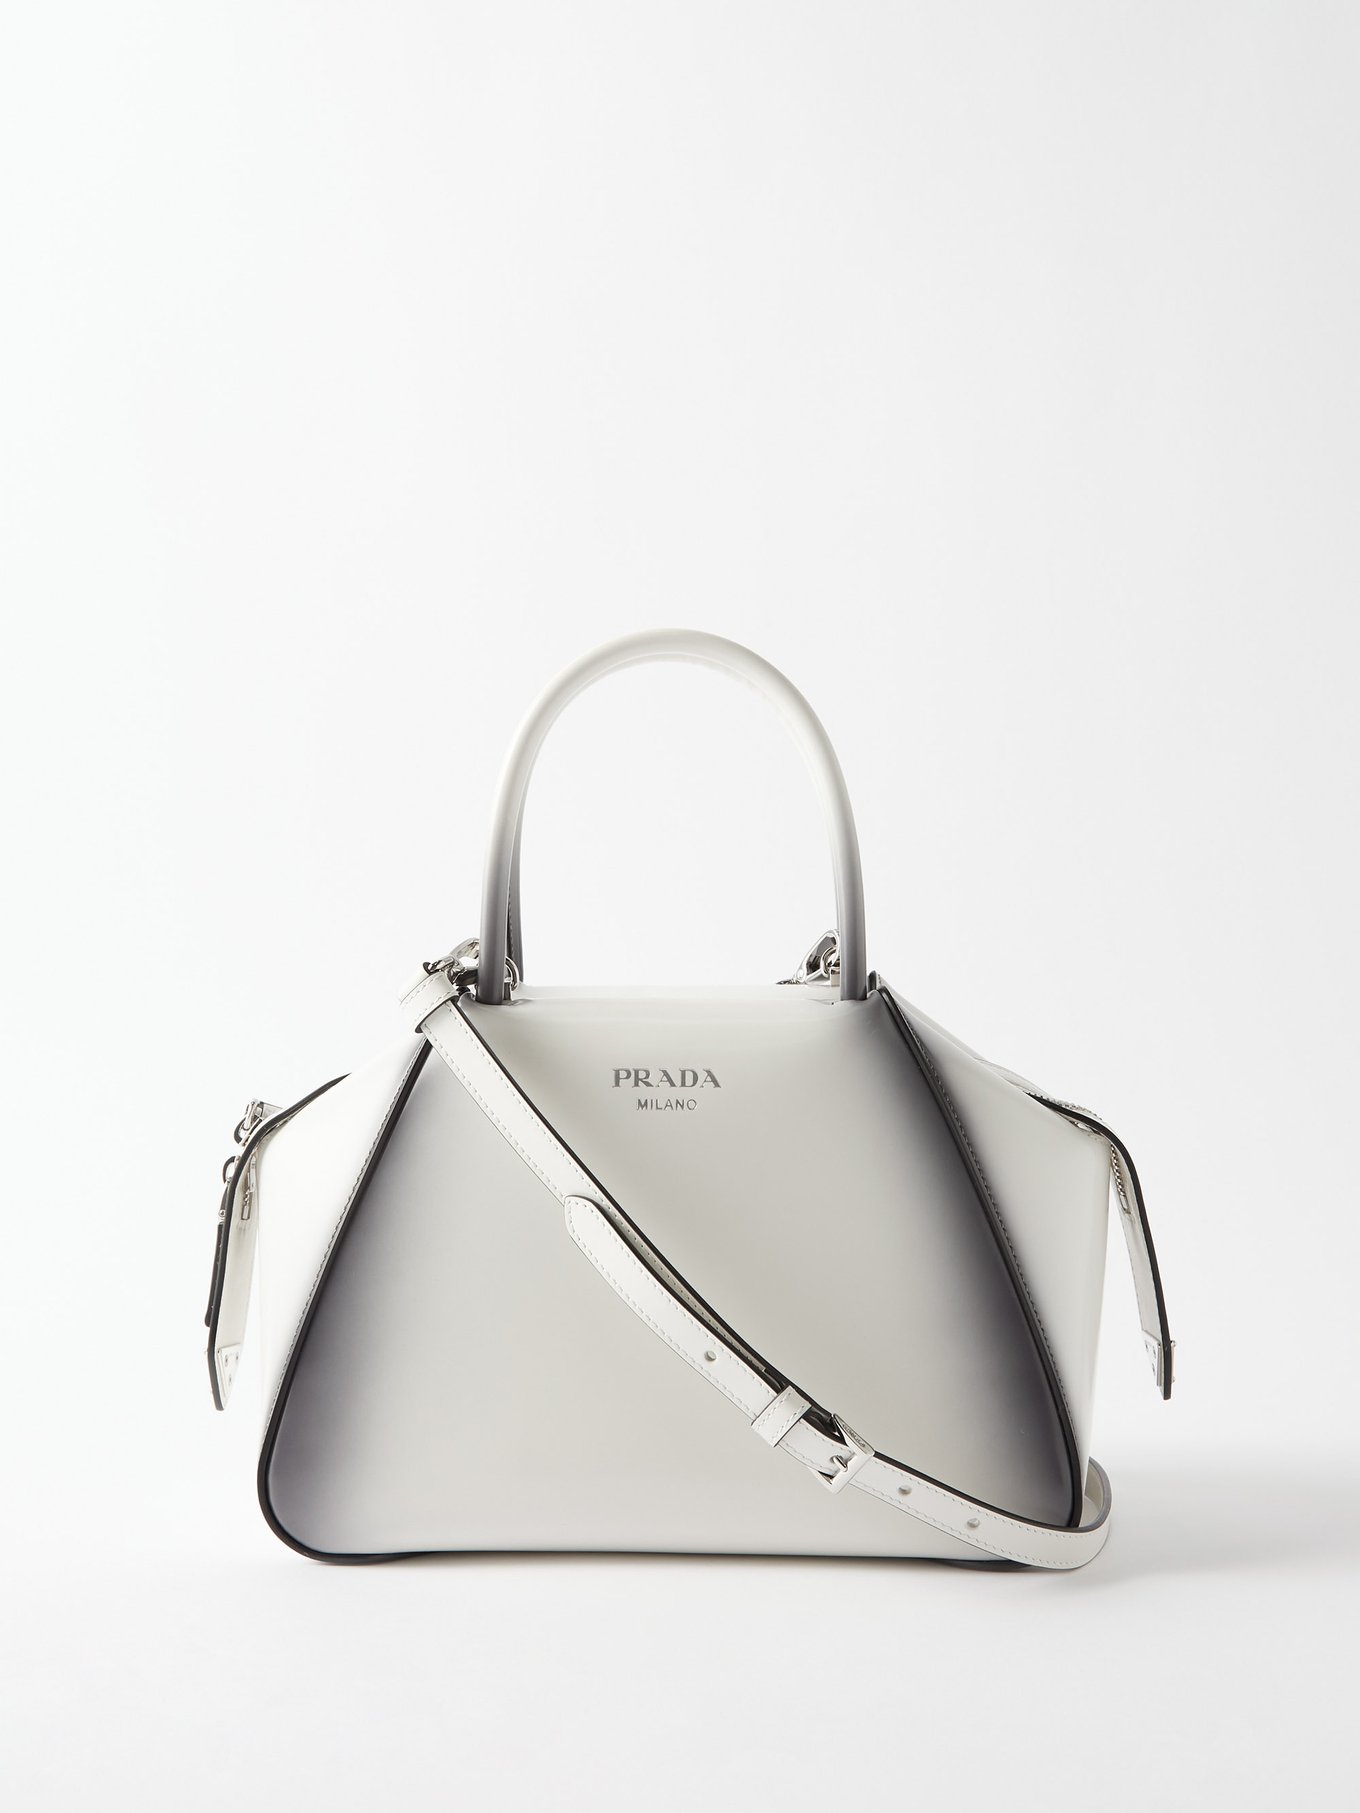 Handbag DKNY - High top shoes - Evening handbags - Handbags